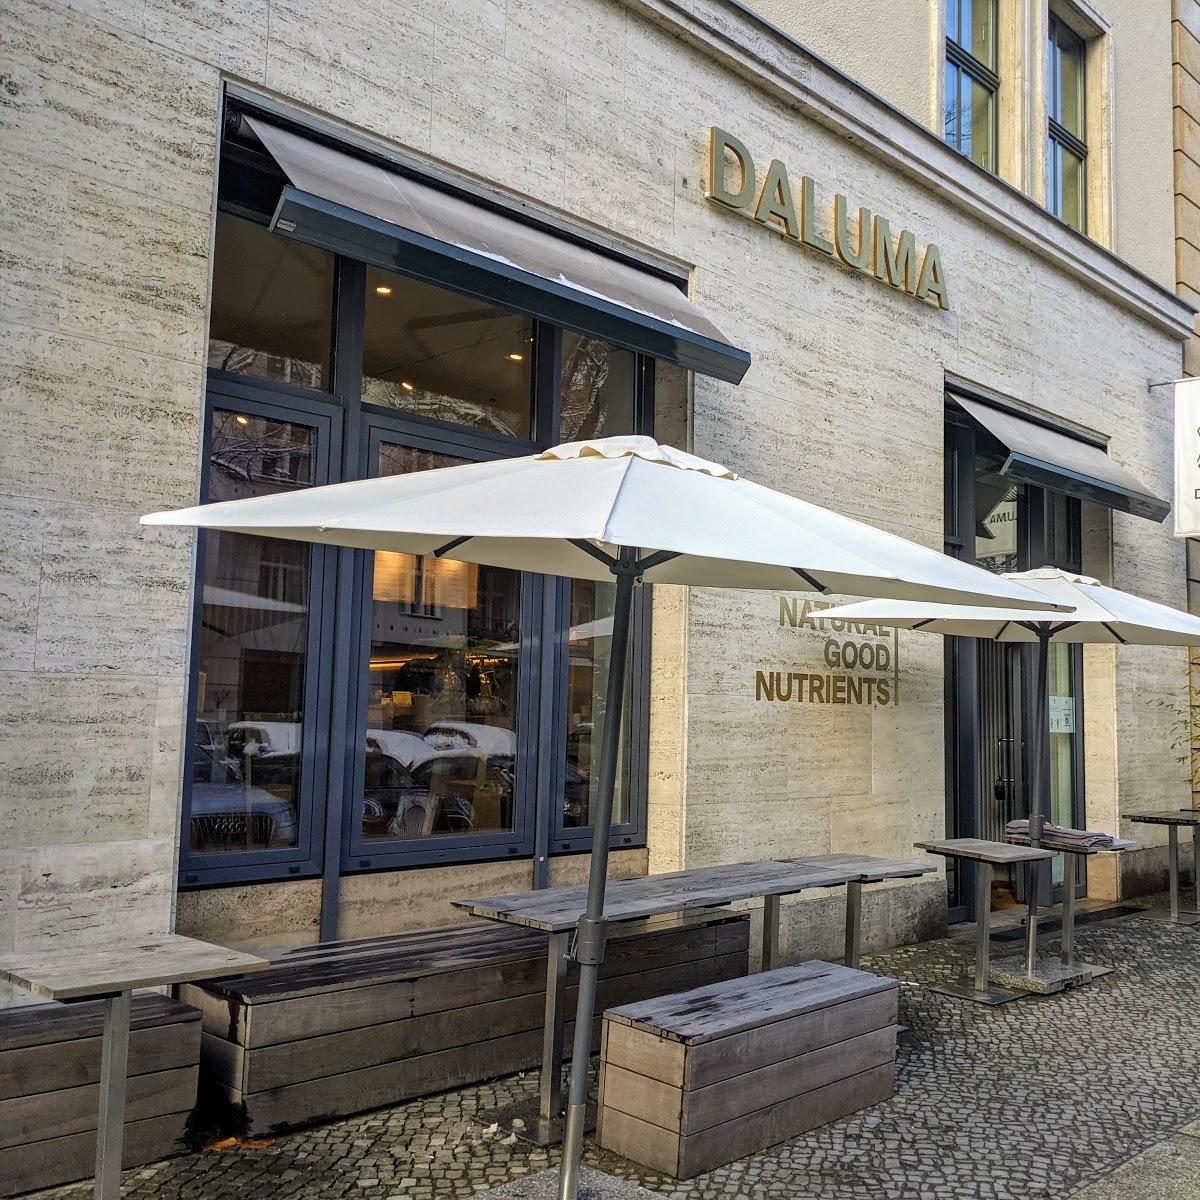 Restaurant "DALUMA" in Berlin